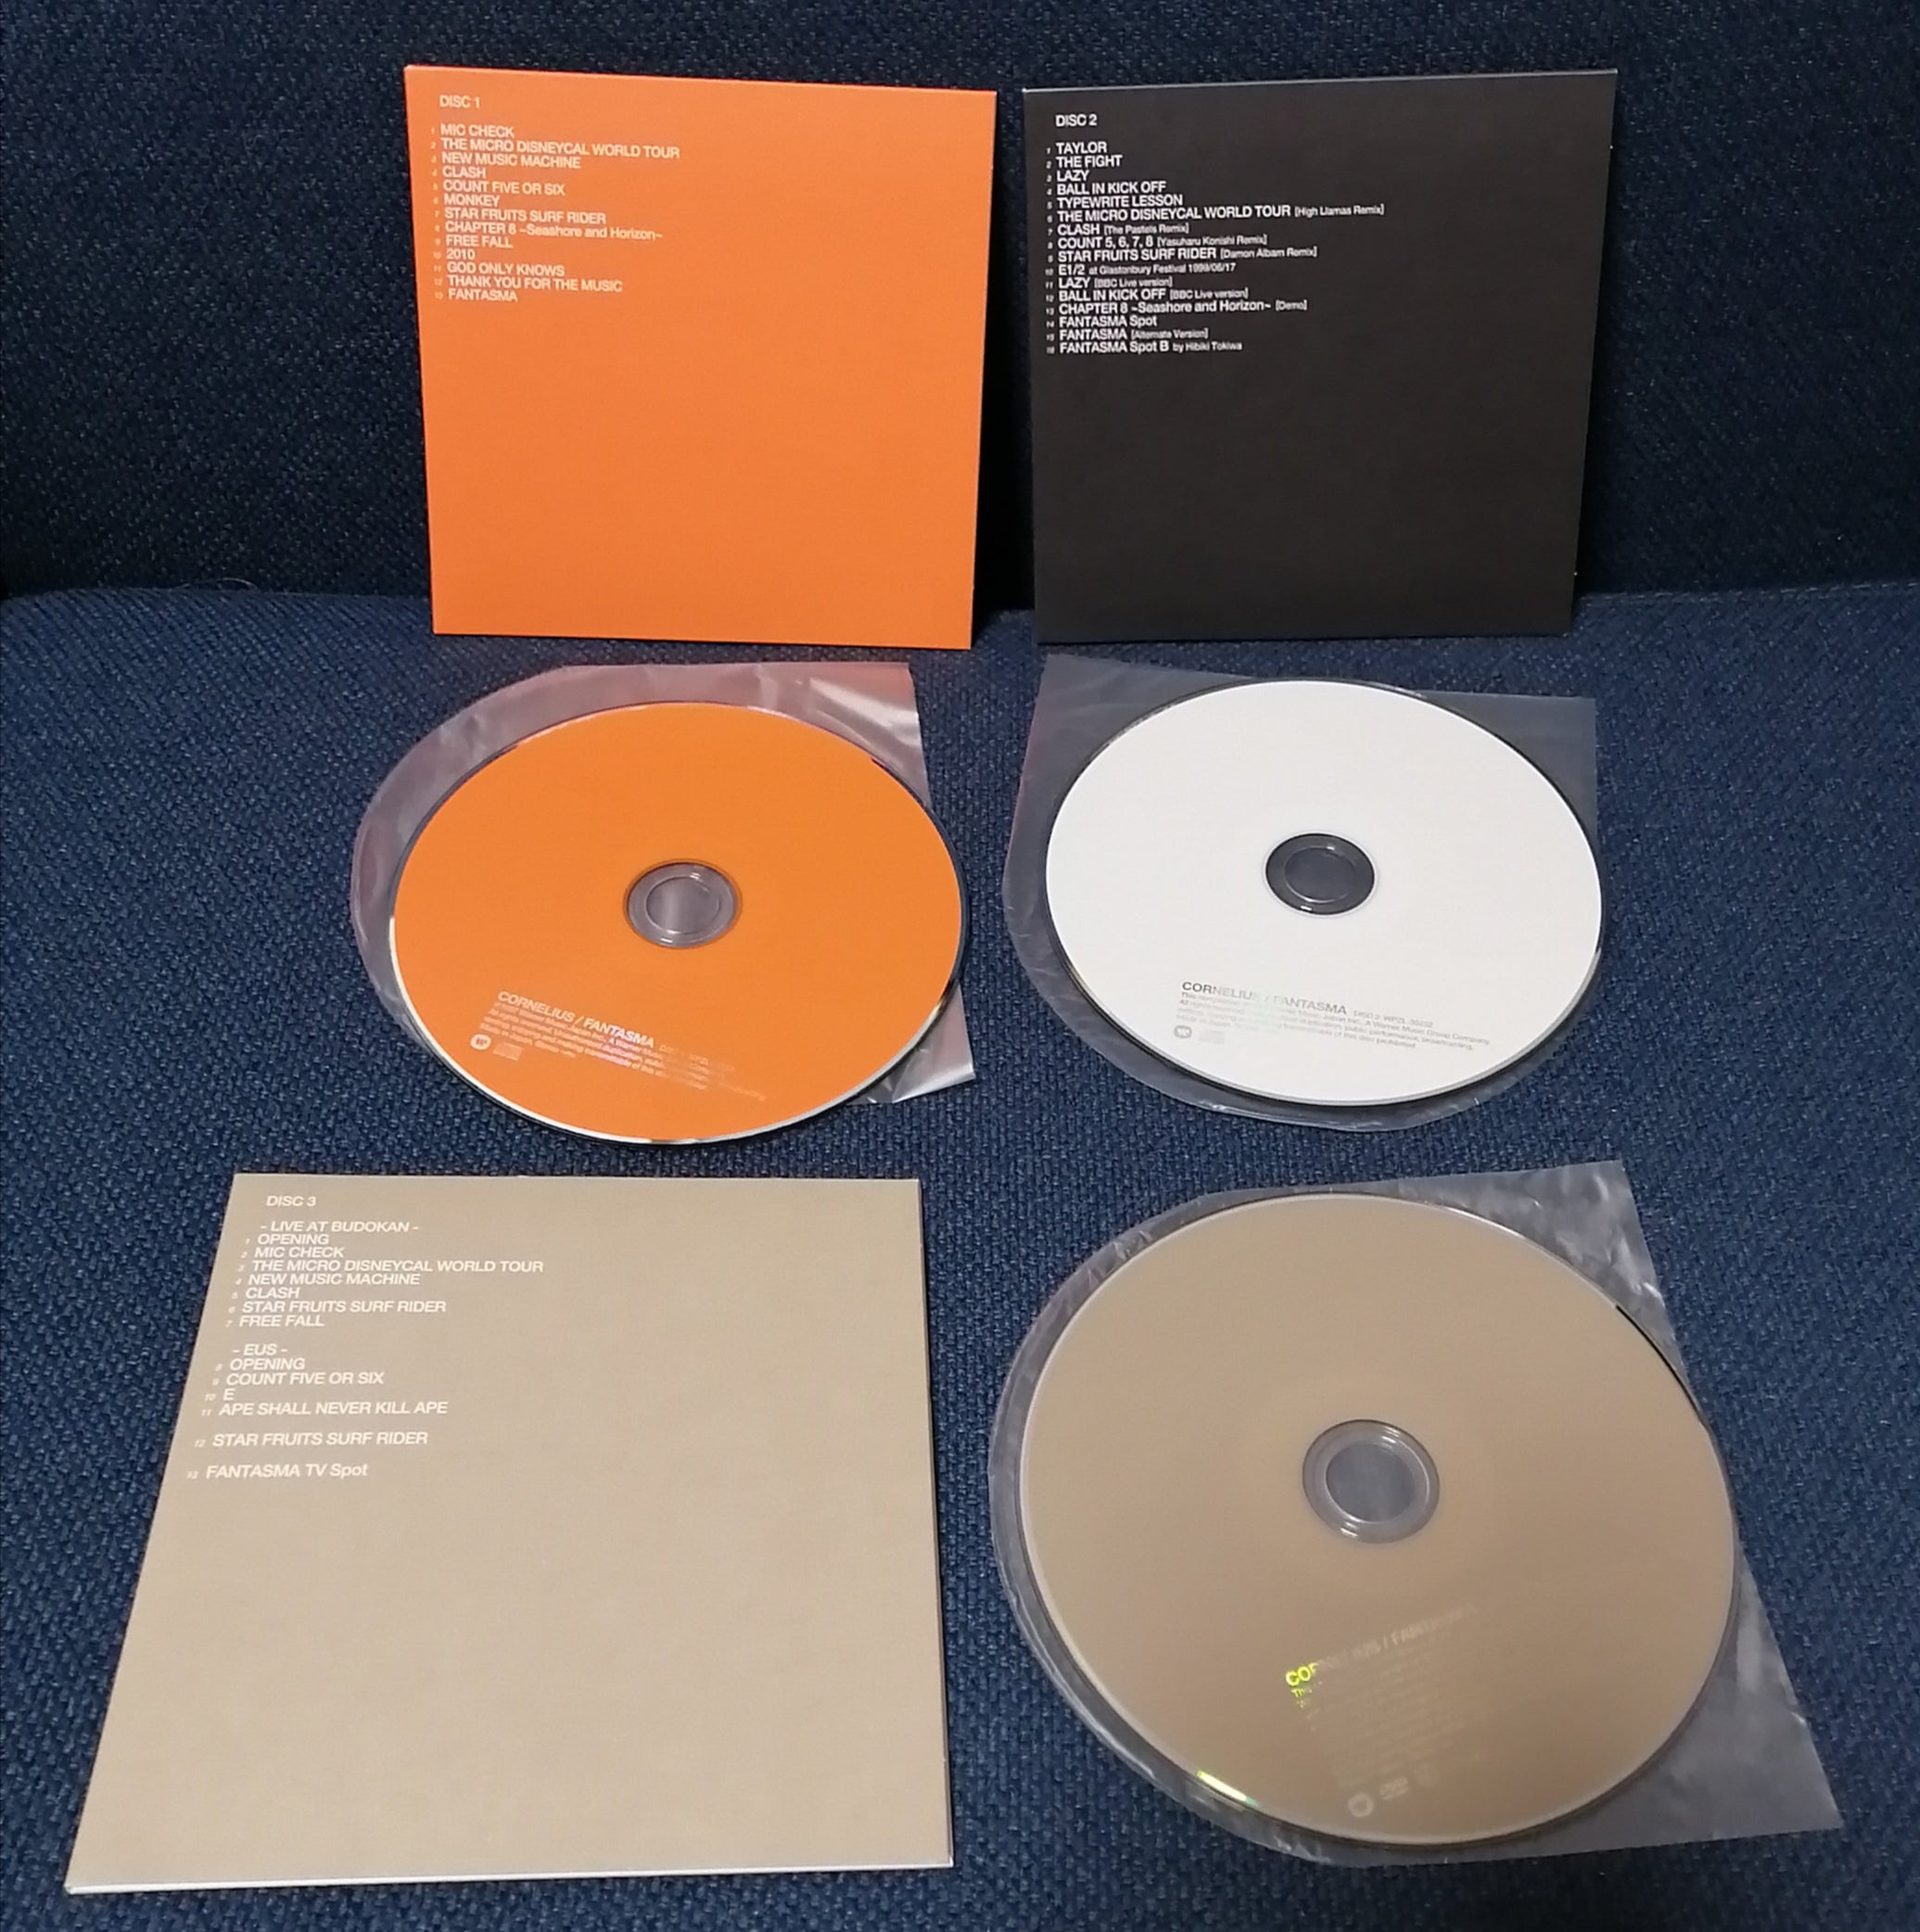 Cornelius - Fantasma album (CD+DVD) Limited Slipcase – Ongaku 